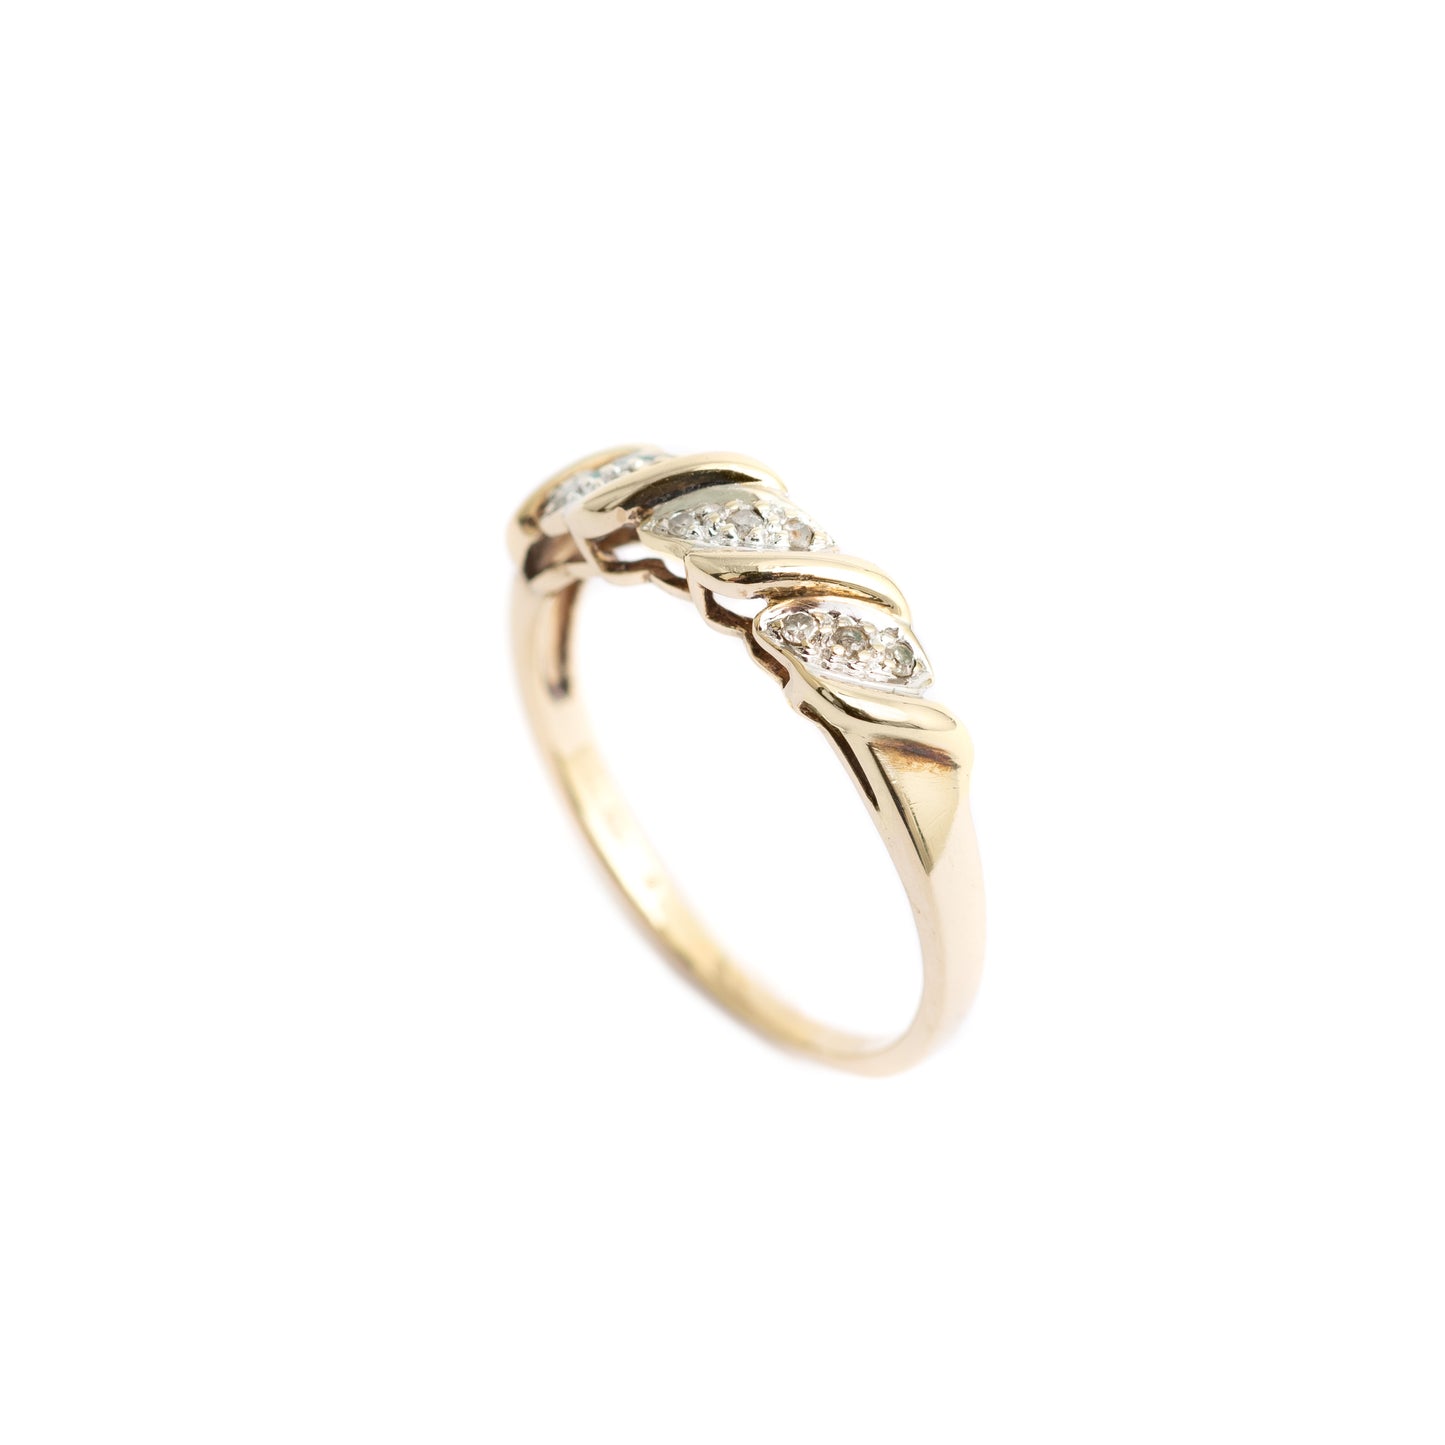 Ladies 9ct Gold Diamond Ring Twist Set With 9 Diamonds Size O  (Code A394)